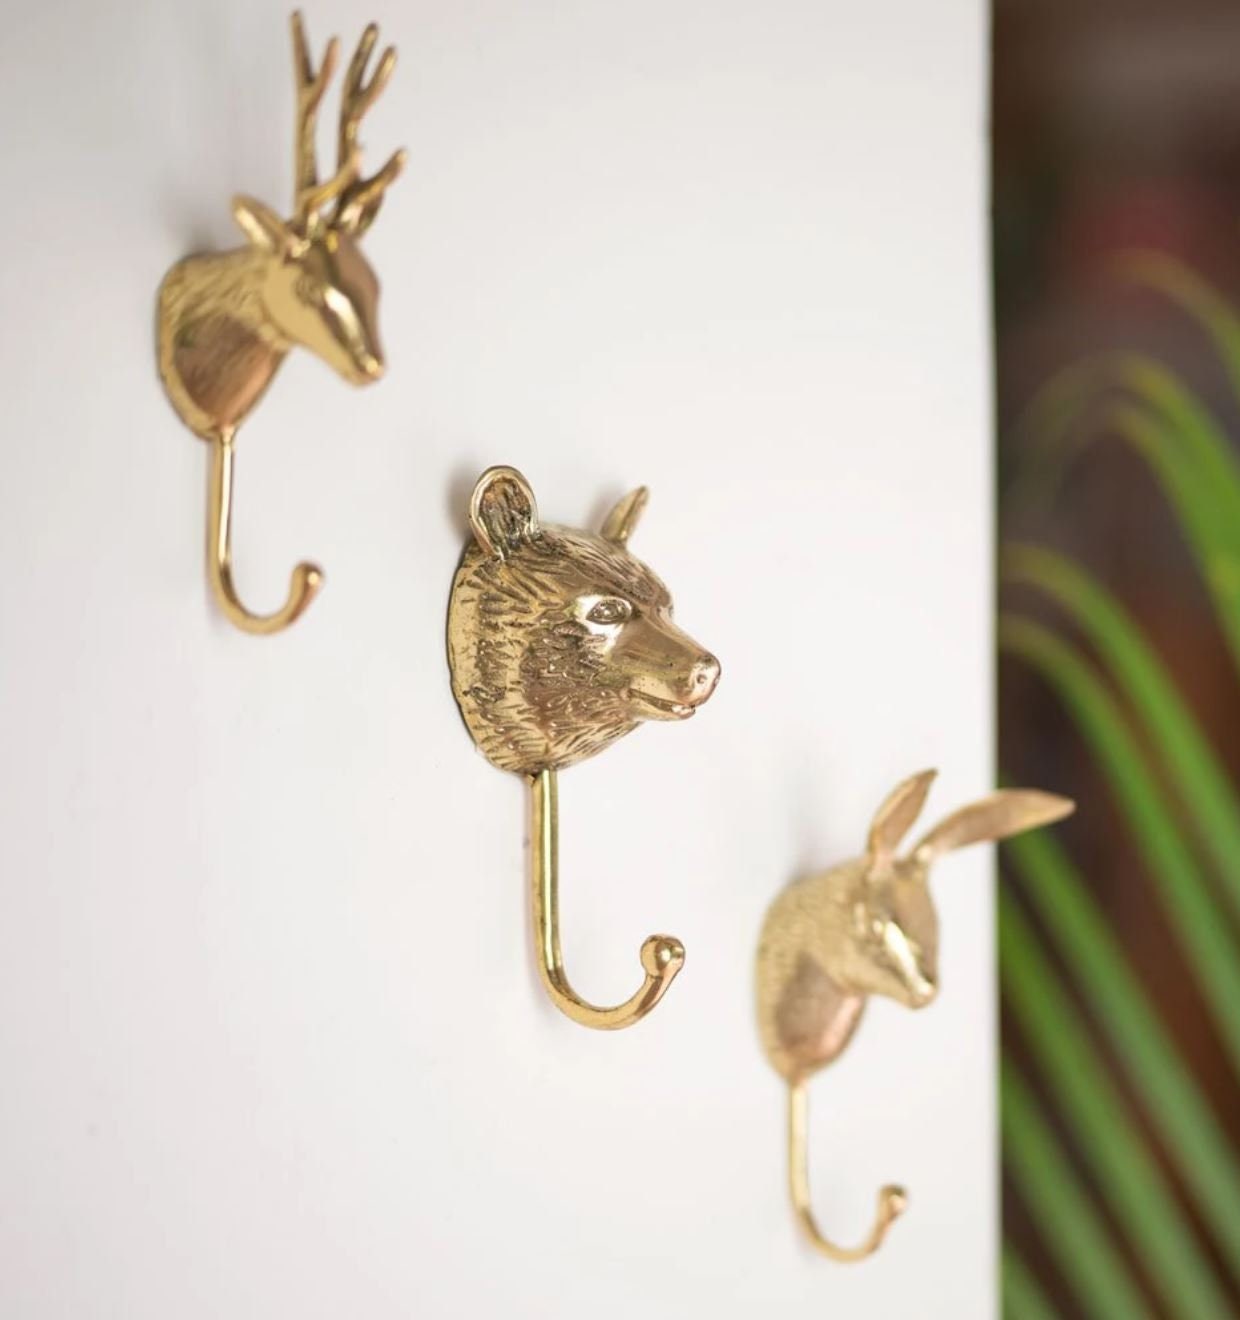 Brass Hook / Wall Hook / Nursery Hook / Gold Homewares / Animal Head Hook / Decorative  Hook / Safari Decor / Gold Details / Home Accents 